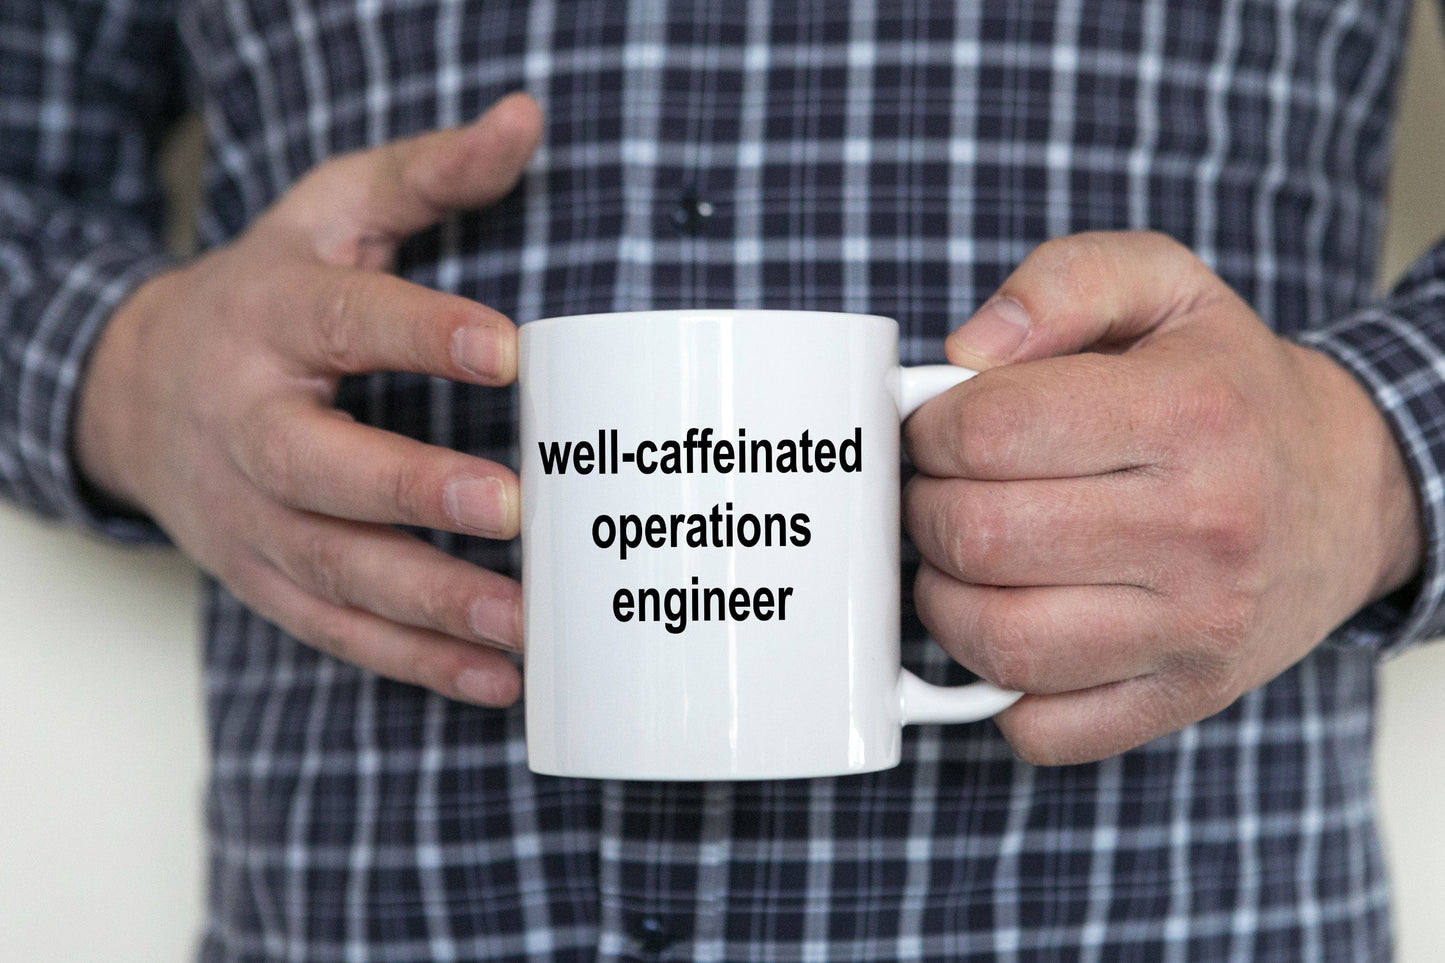 Operations Engineer White Ceramic Coffee Mug